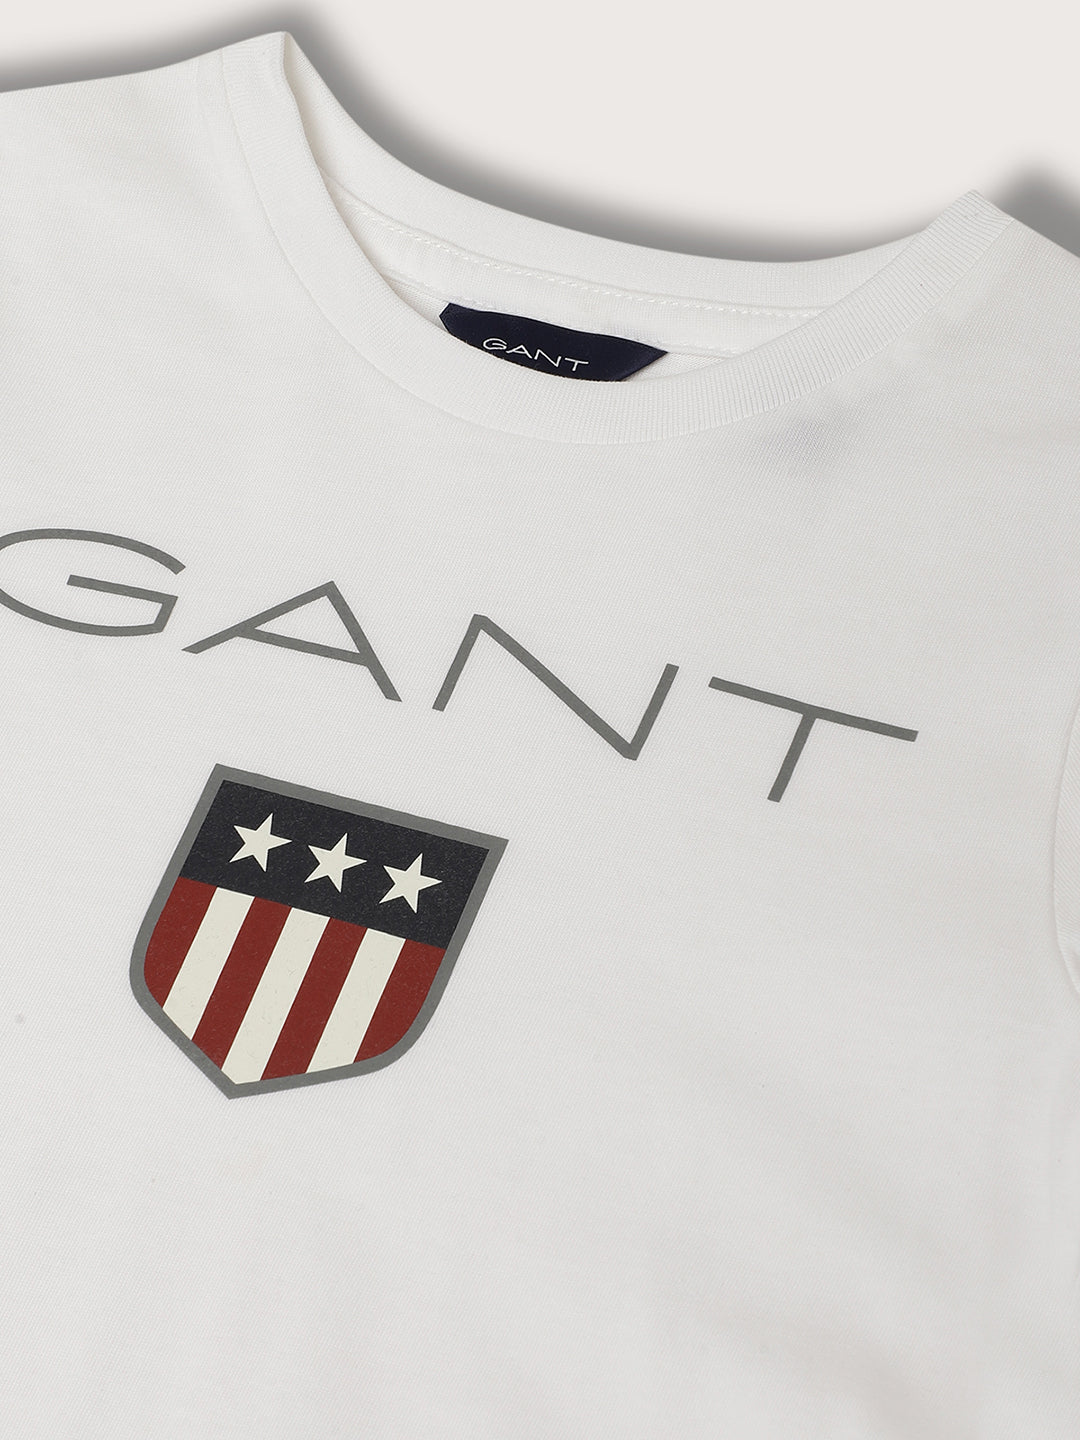 Gant Boys Printed Round Neck Cotton T-shirt